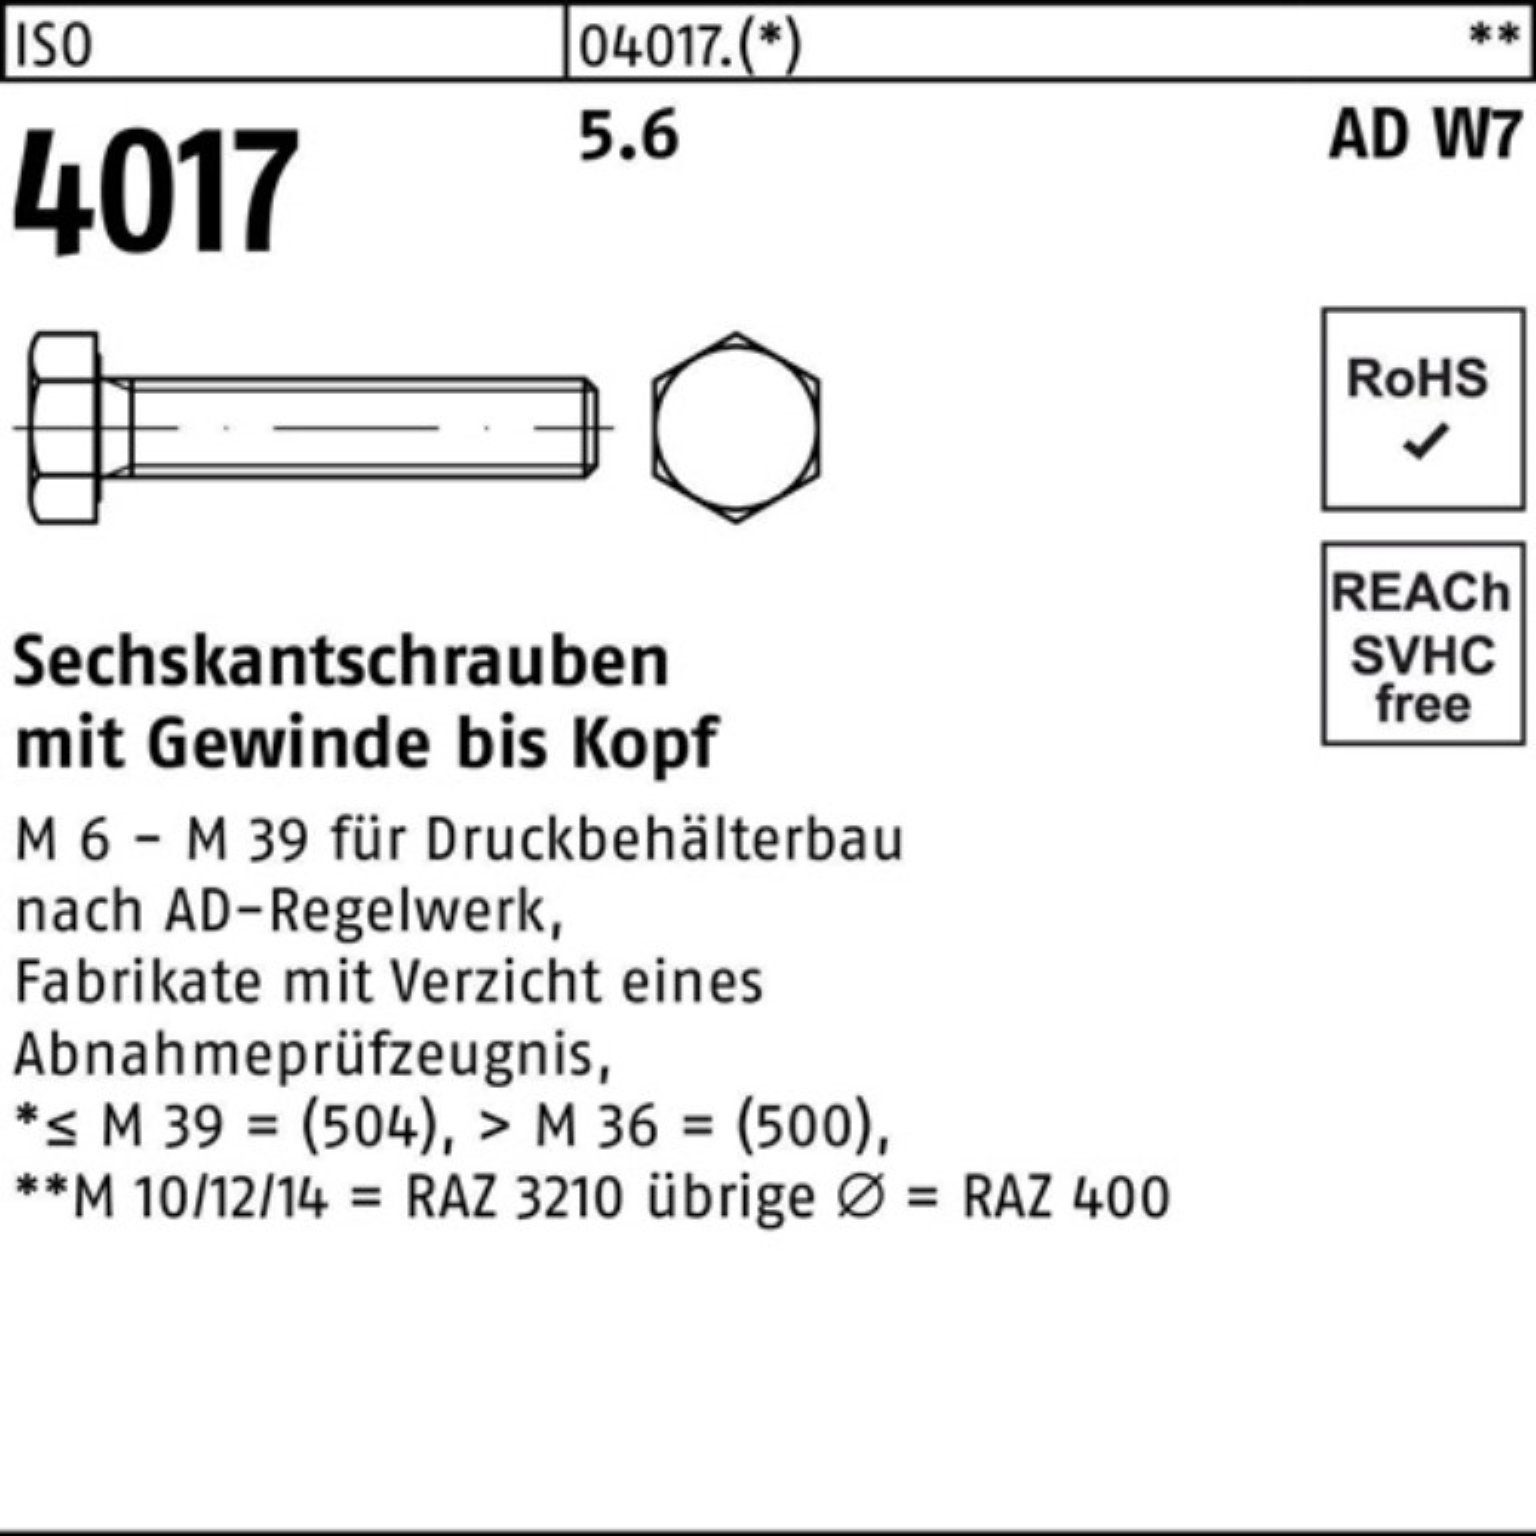 Sechskantschraube 5.6 W7 Stück 1 IS AD VG Pack 100er ISO 4017 M27x Sechskantschraube 80 Bufab